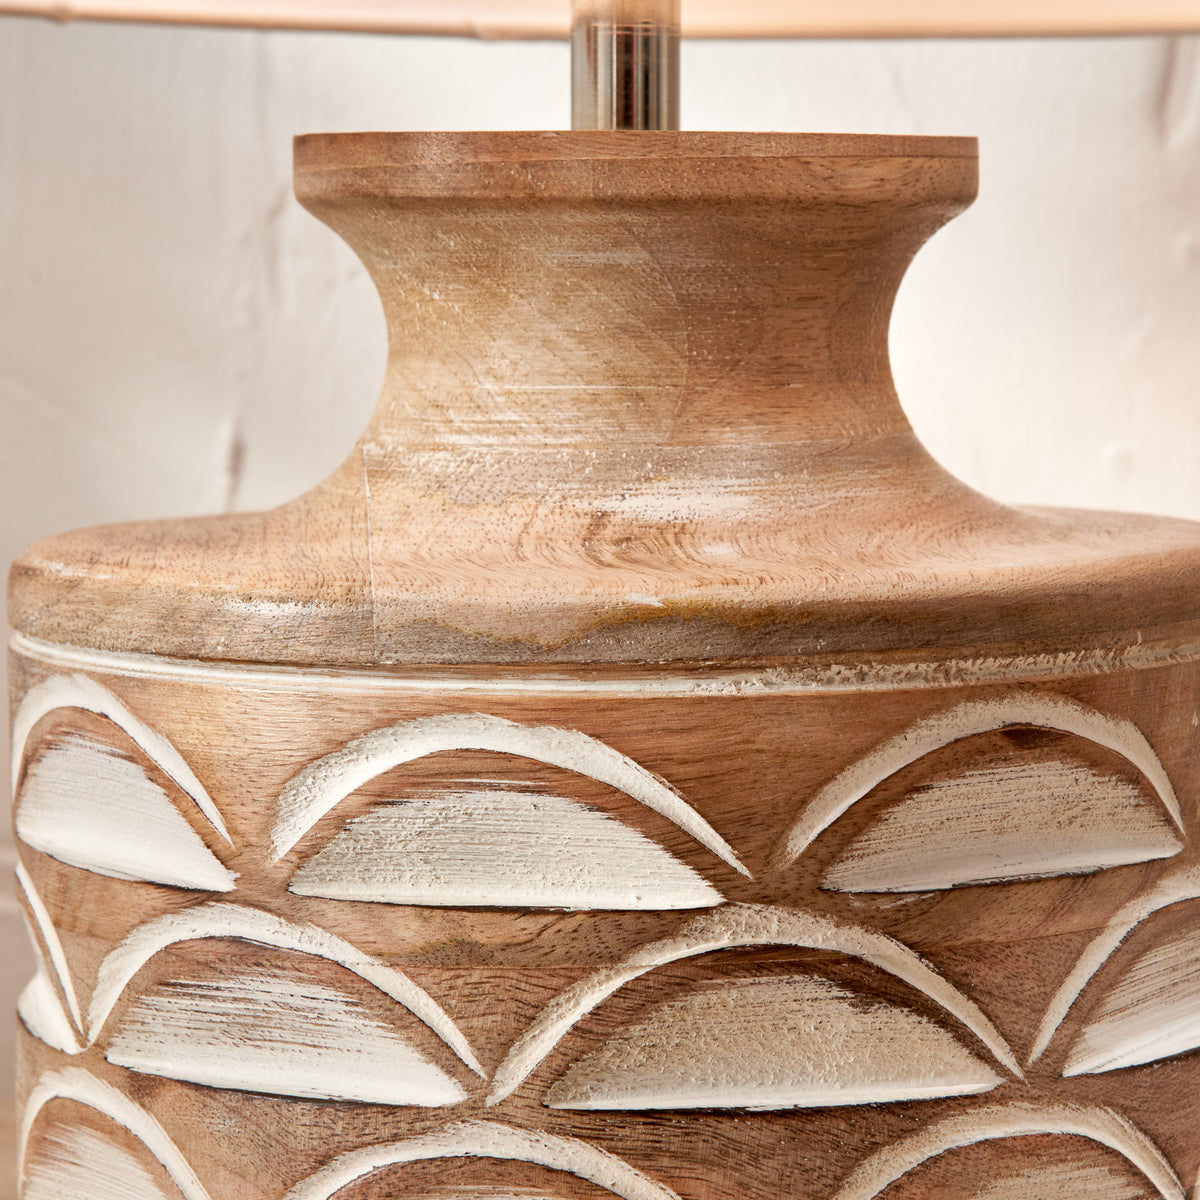 Kingsbury White Wash Carved Wood Table Lamp